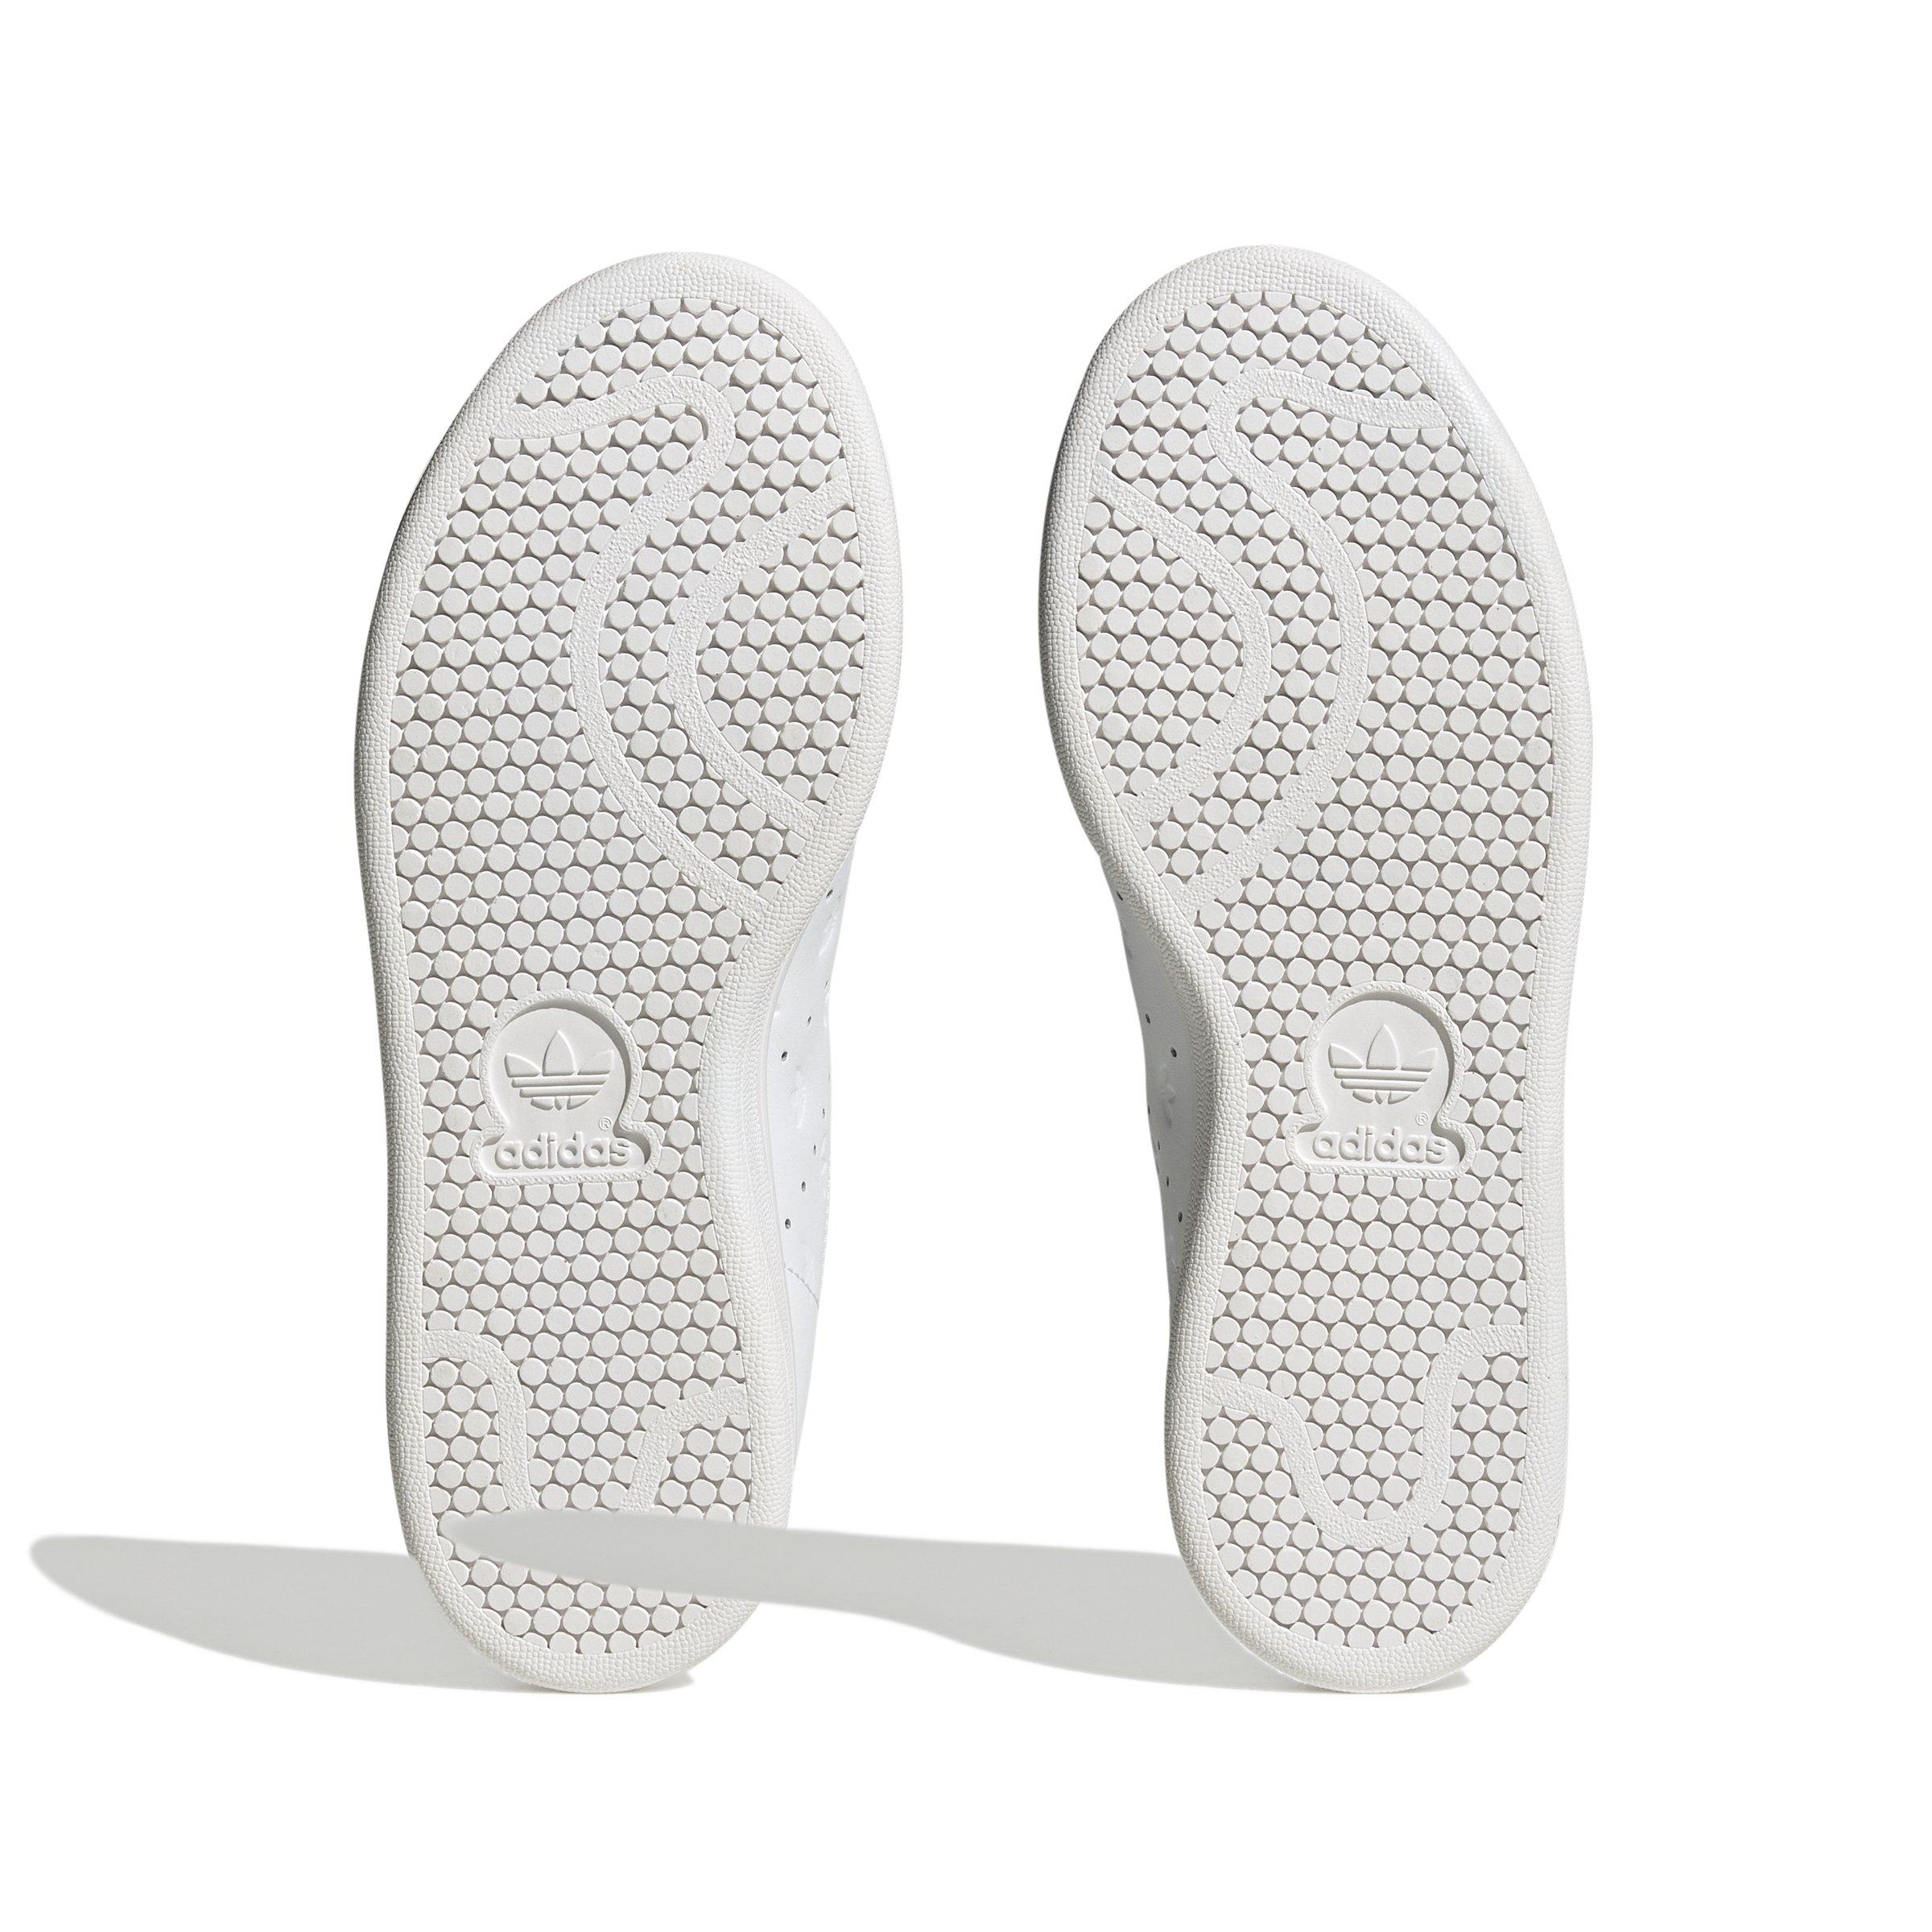 Adidas Women's Stan Smith Footwear White/Scarlet/Metallic Gold - FV3086